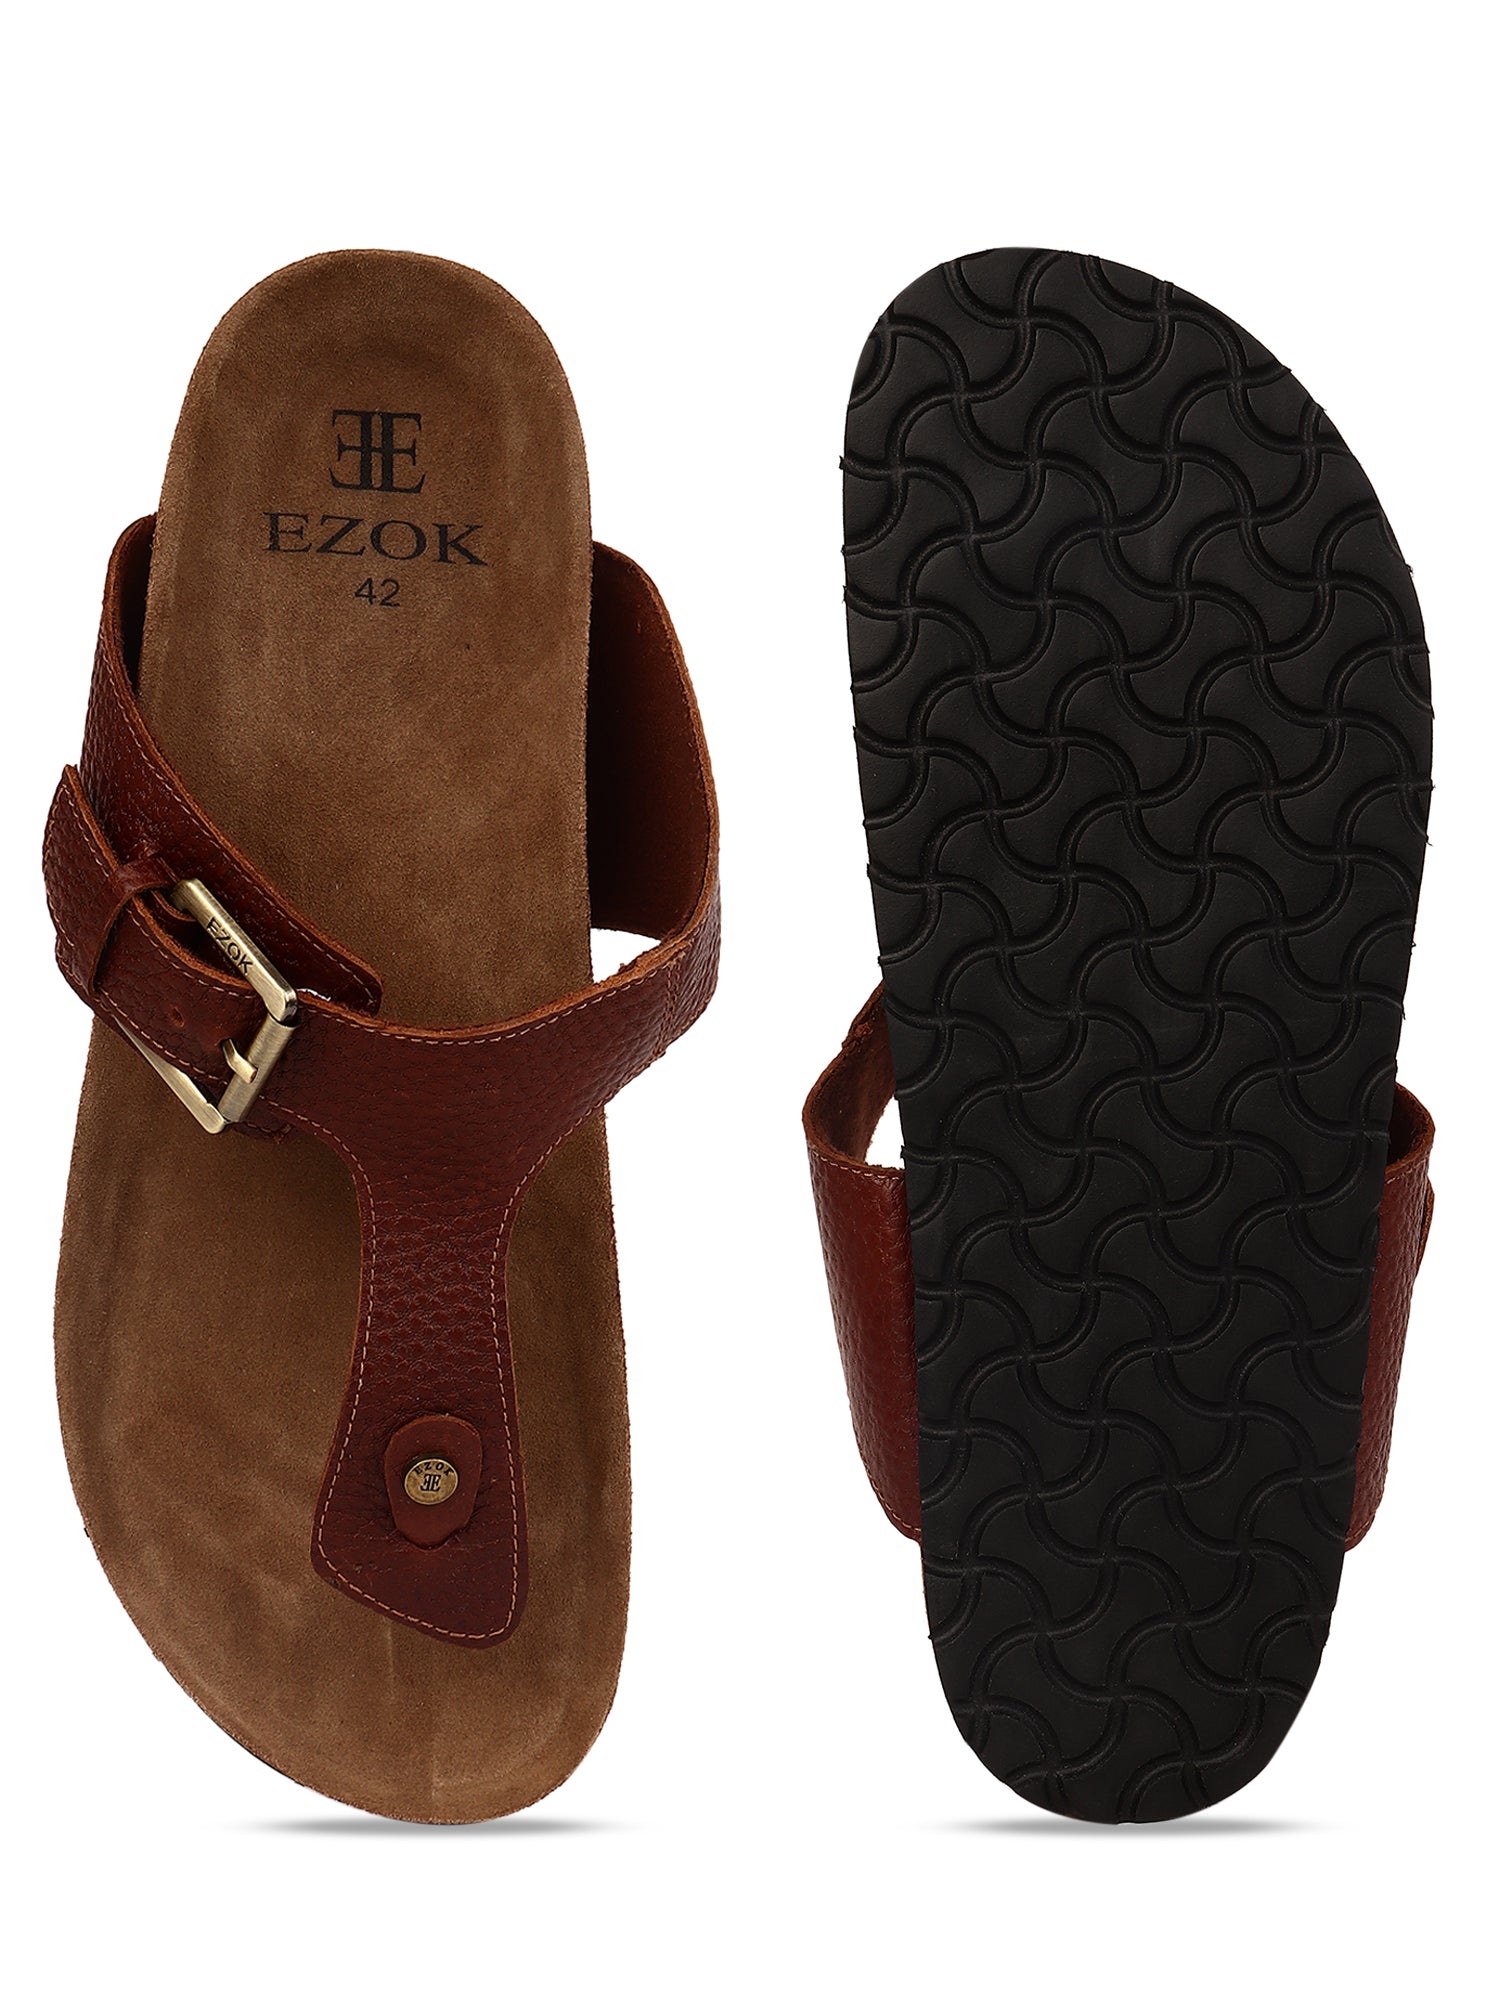 Ezok tan leather sandal (2309)